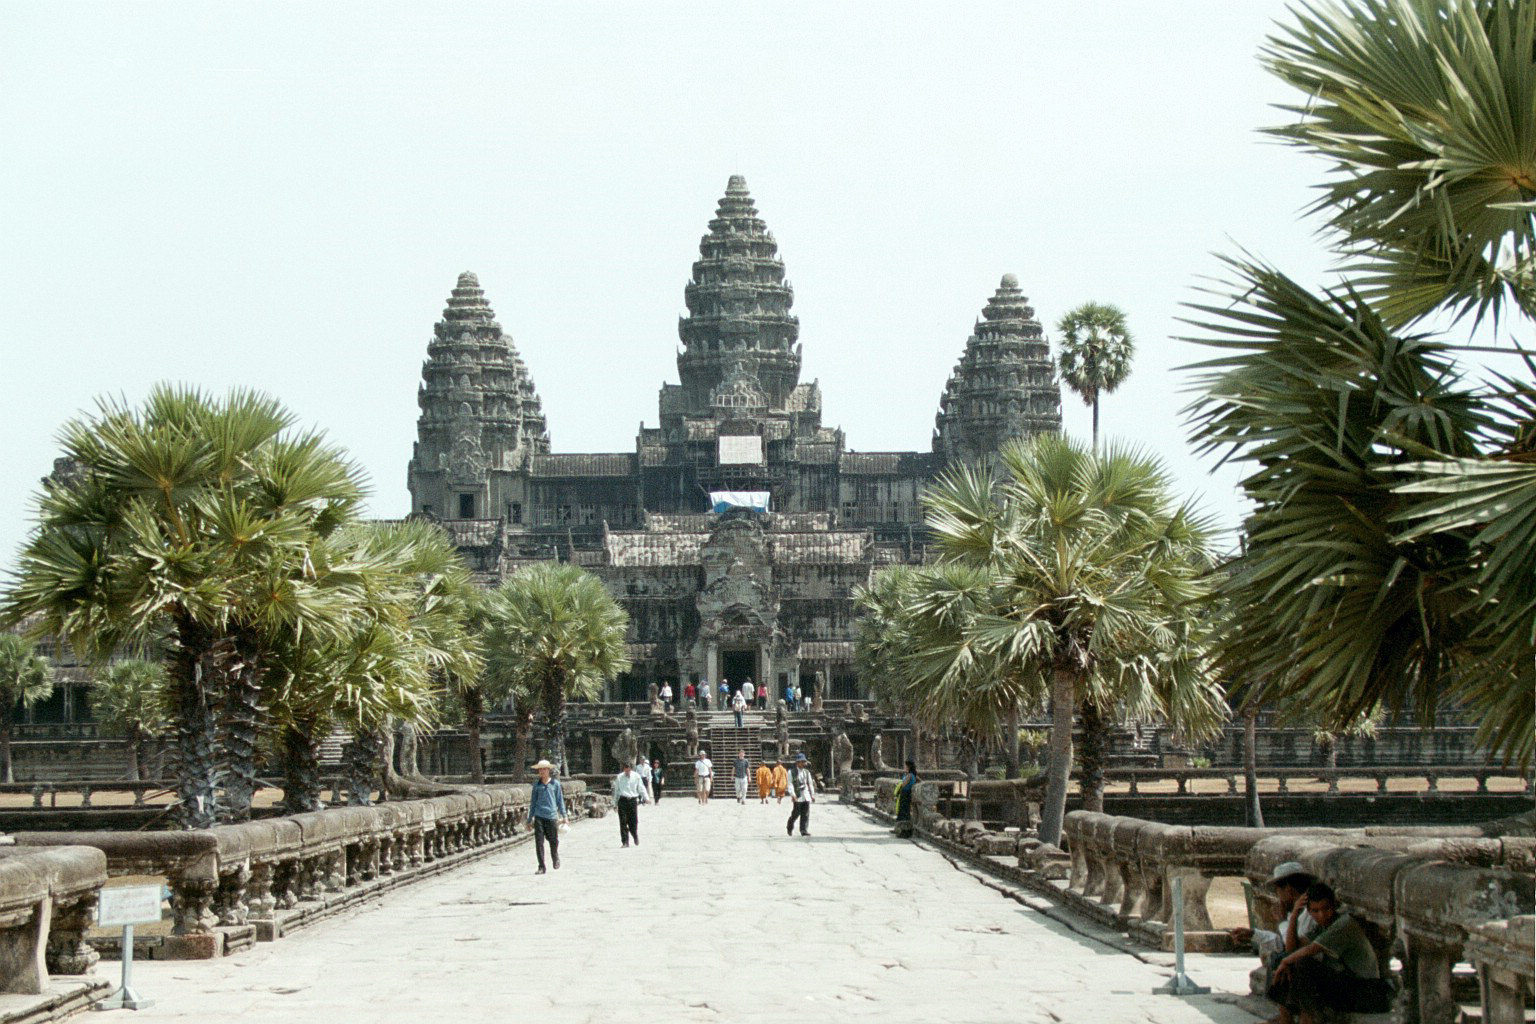 Ankor Wat entrance - Cambodia - March 2003